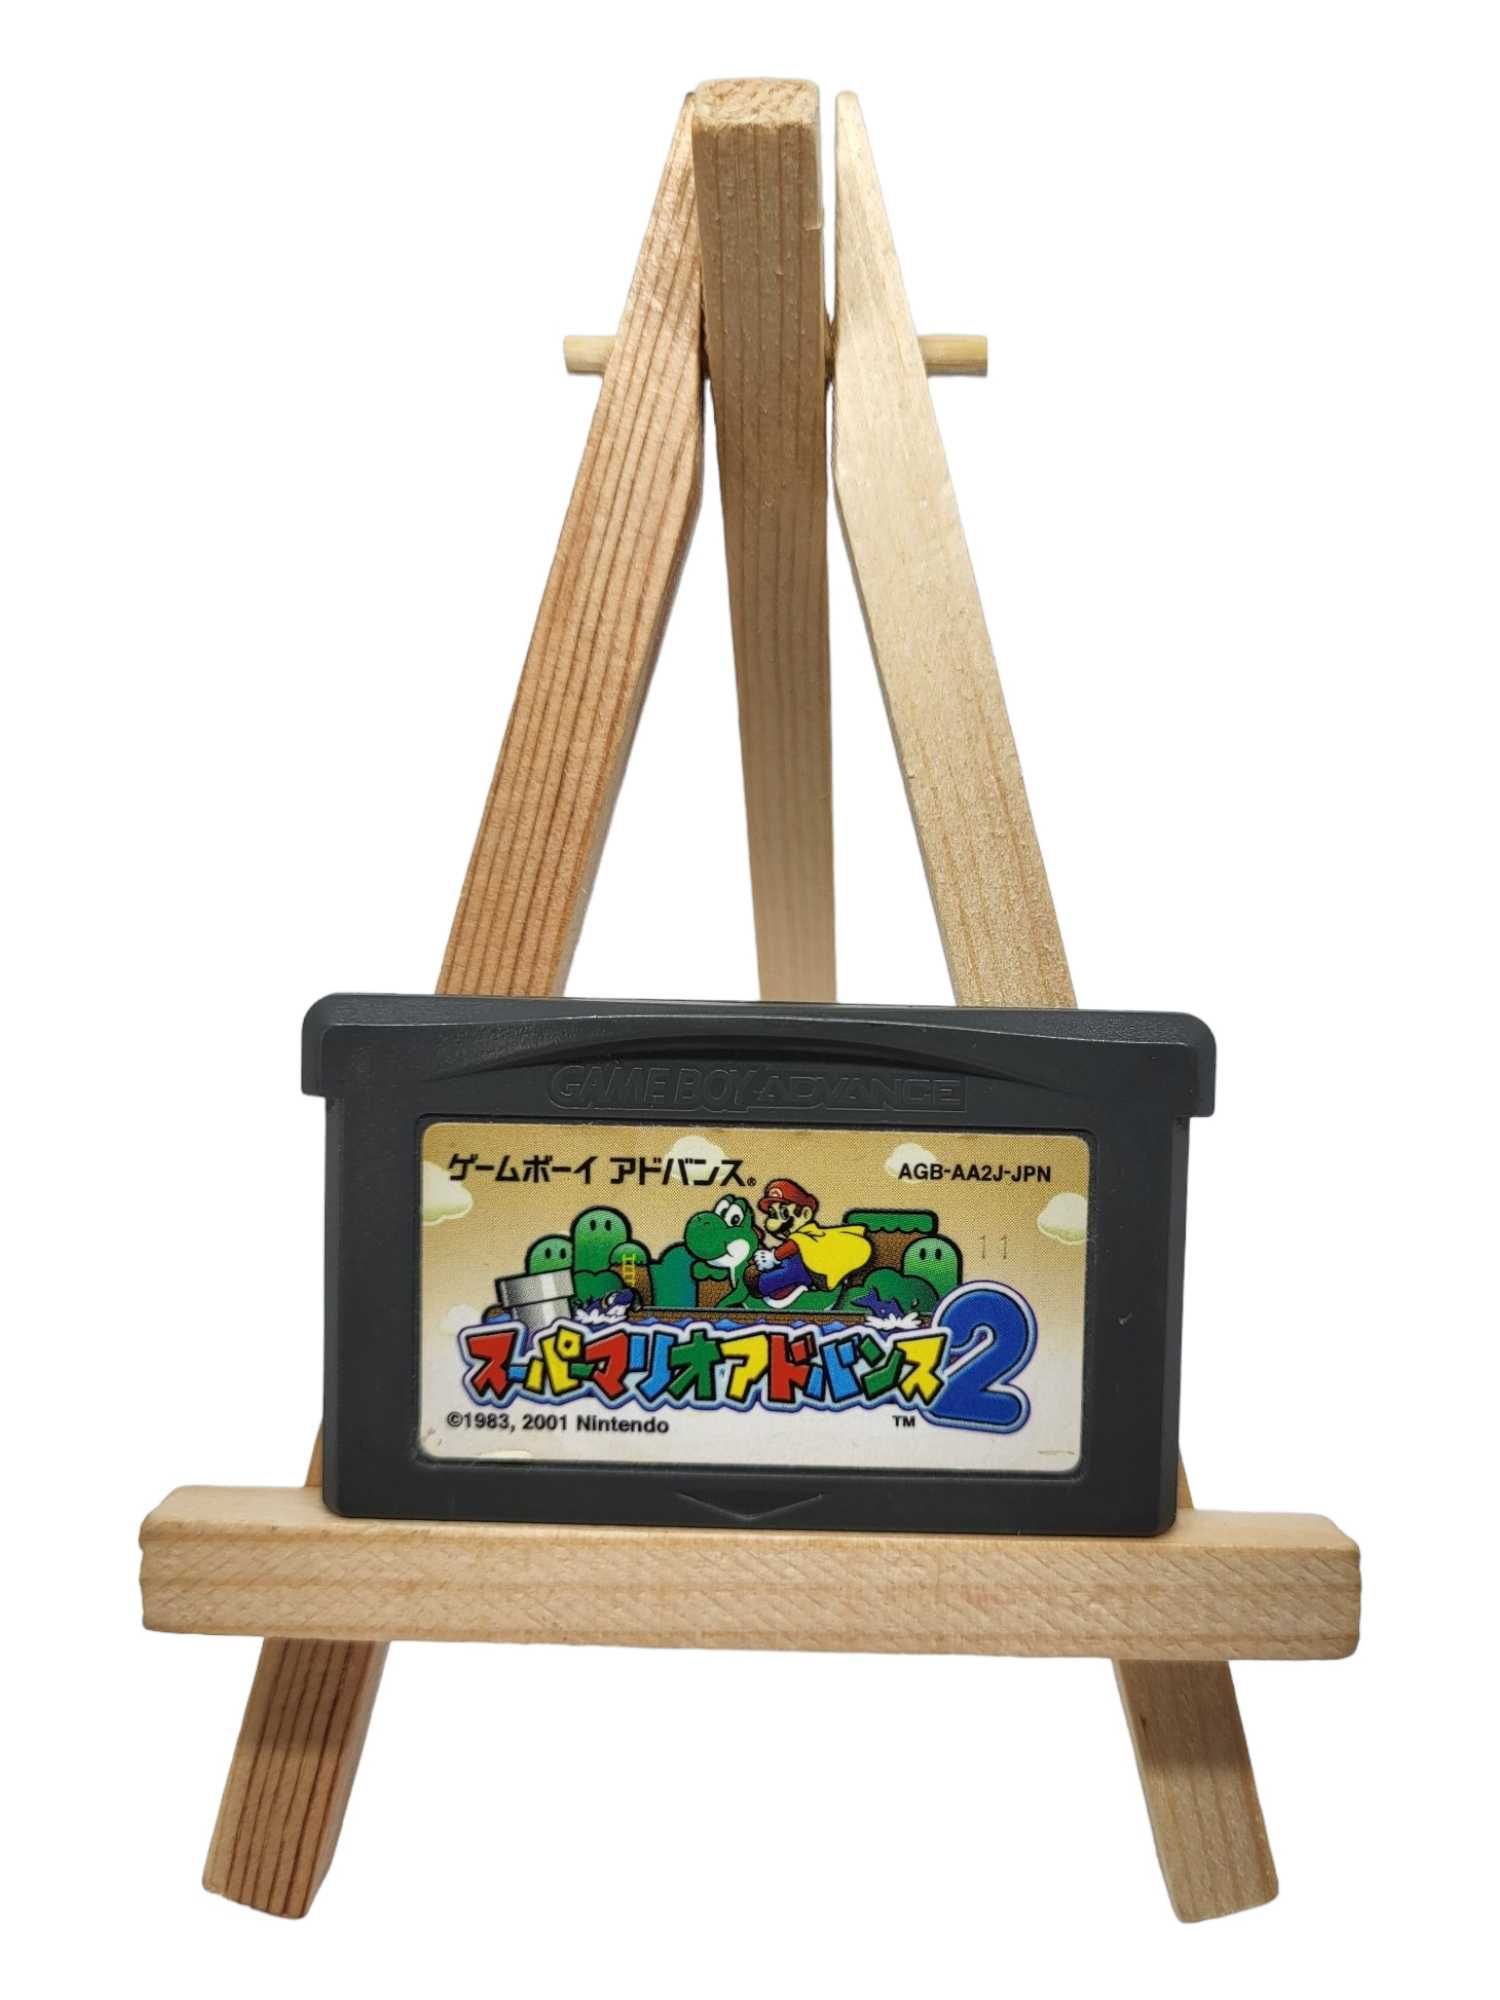 Super Mario 2 Game Boy Gameboy Advance GBA